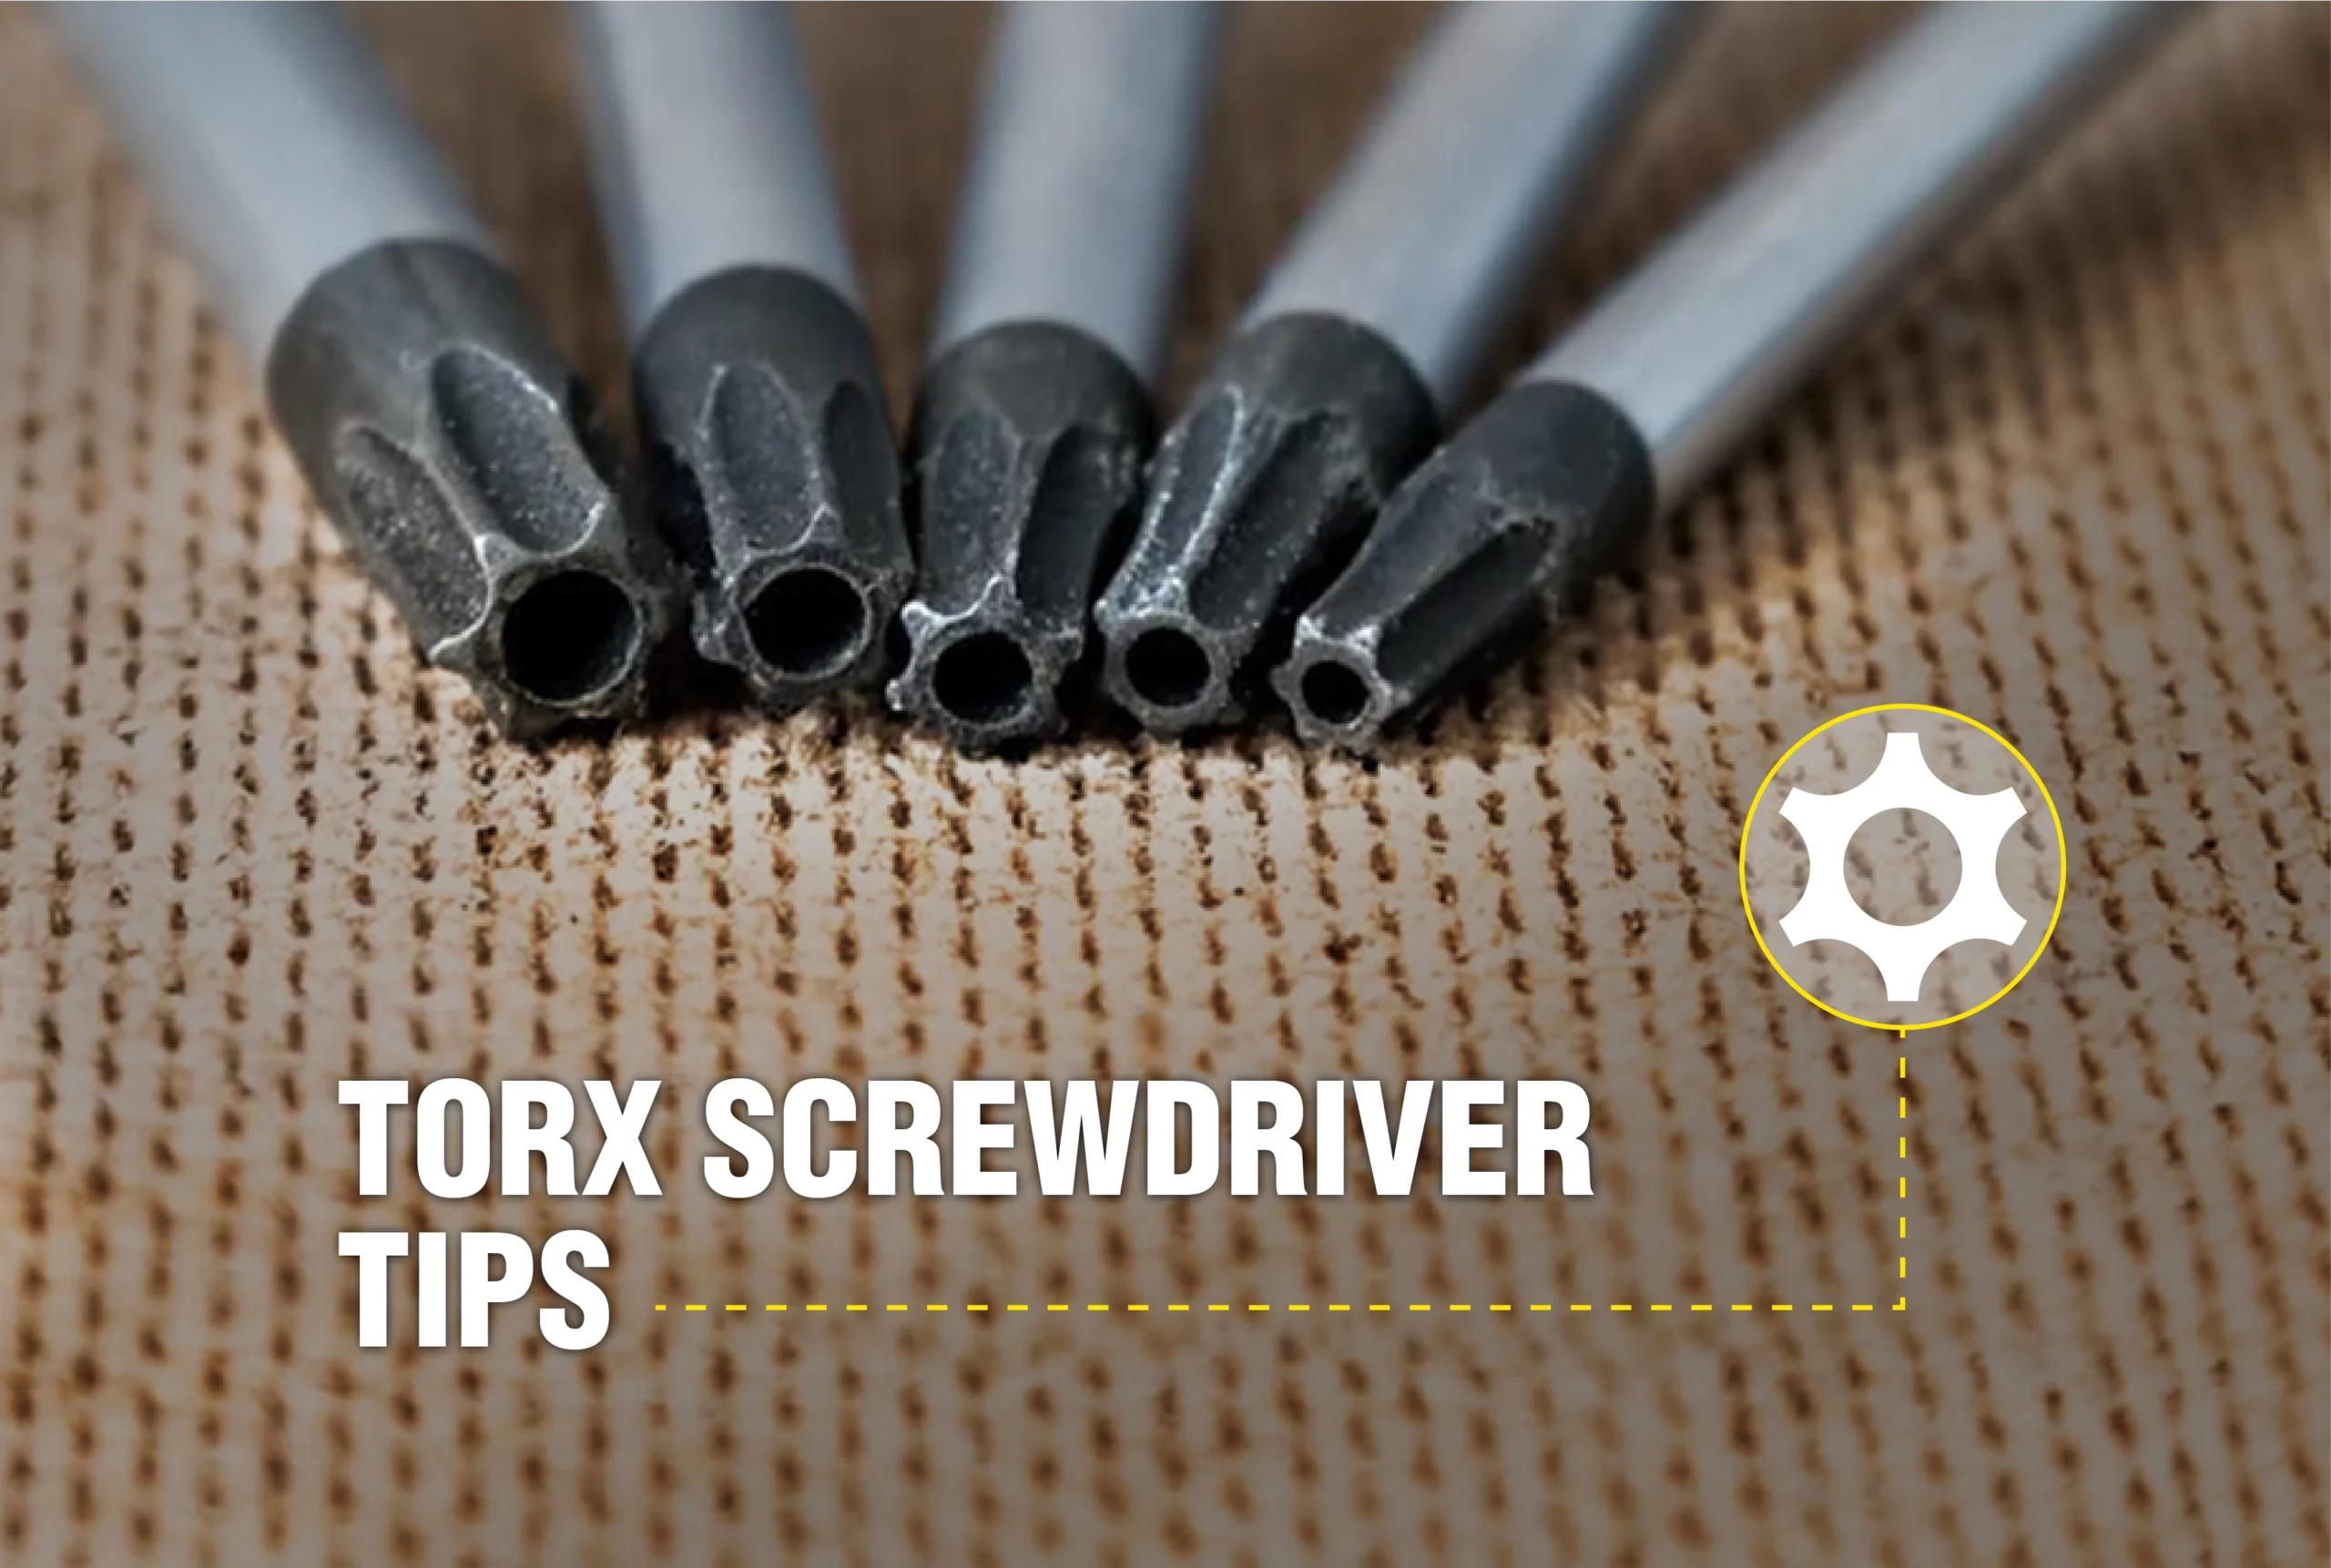 A close-up of Torx screwdrivers tips